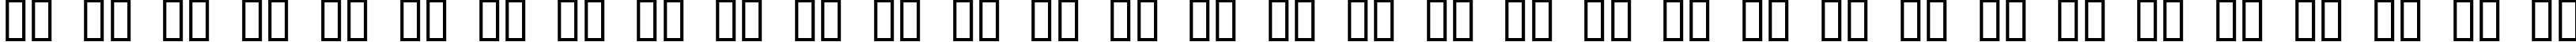 Пример написания русского алфавита шрифтом Dymo Grunge Bubble